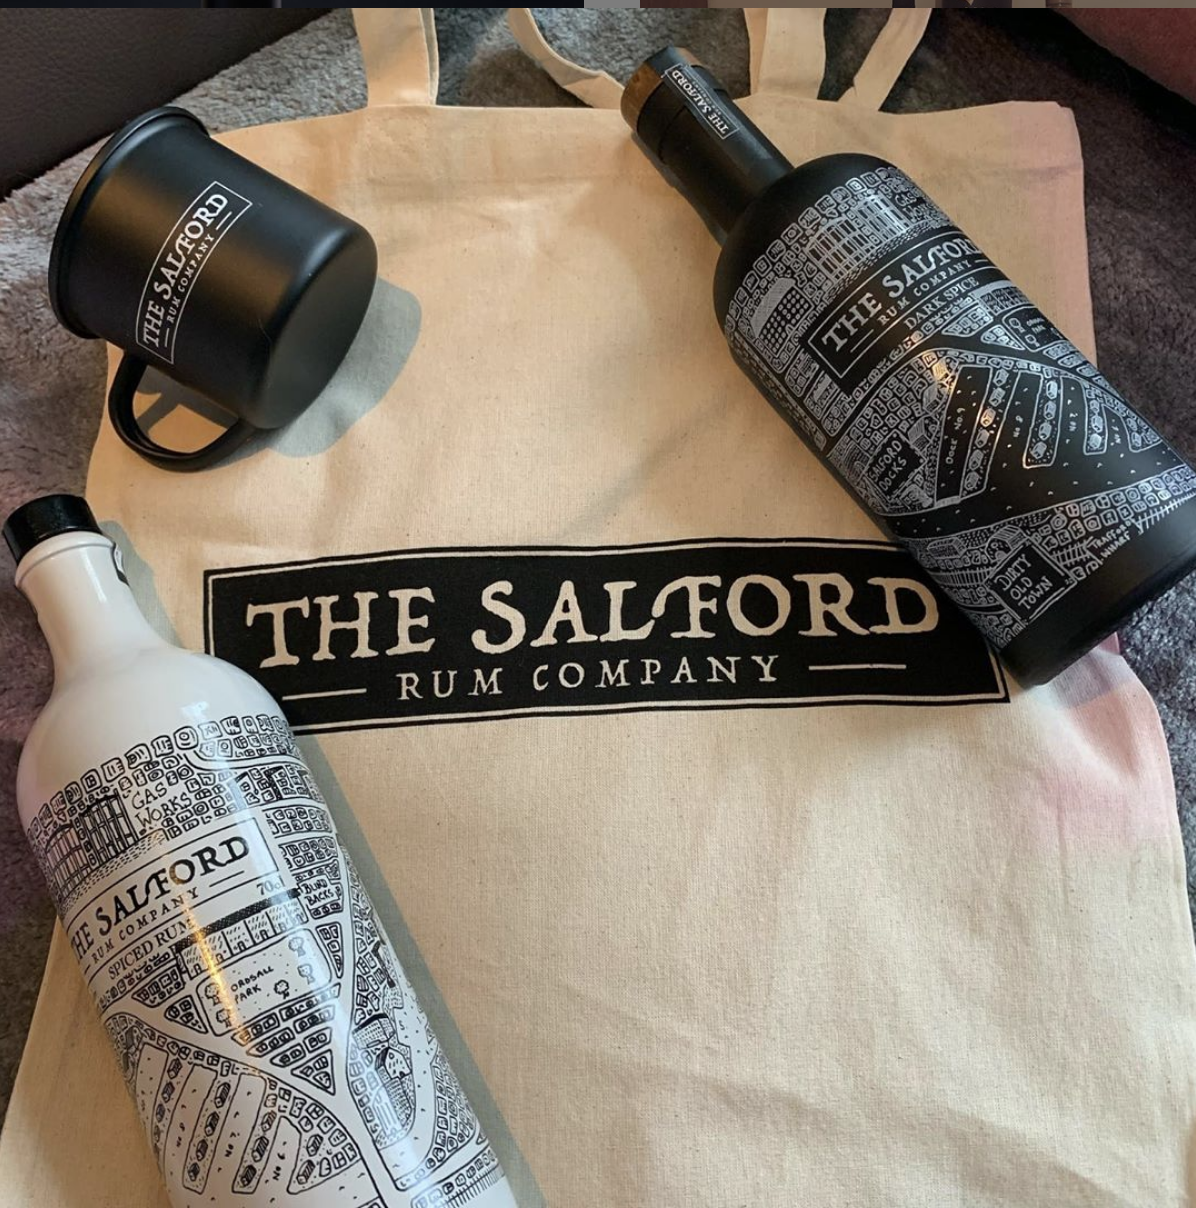 Salford Rum Company merchandise